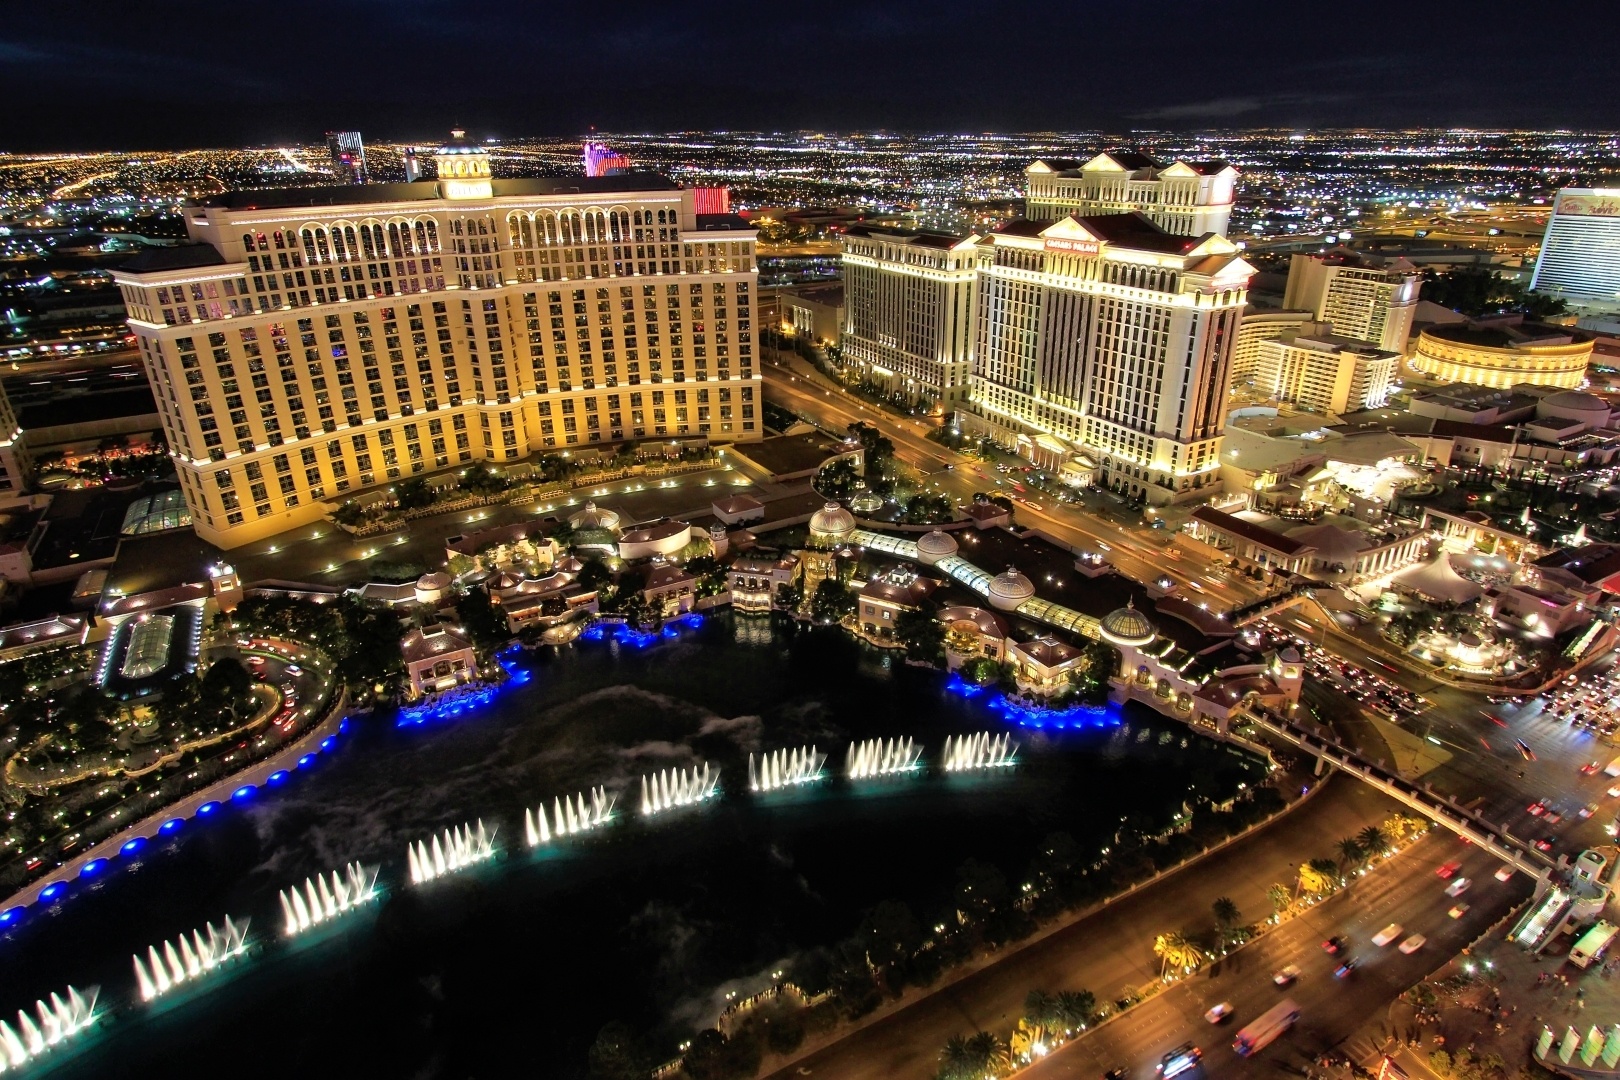 Fountain show at Bellagio hotel and casino at night, Las Vegas, Nevada, USA